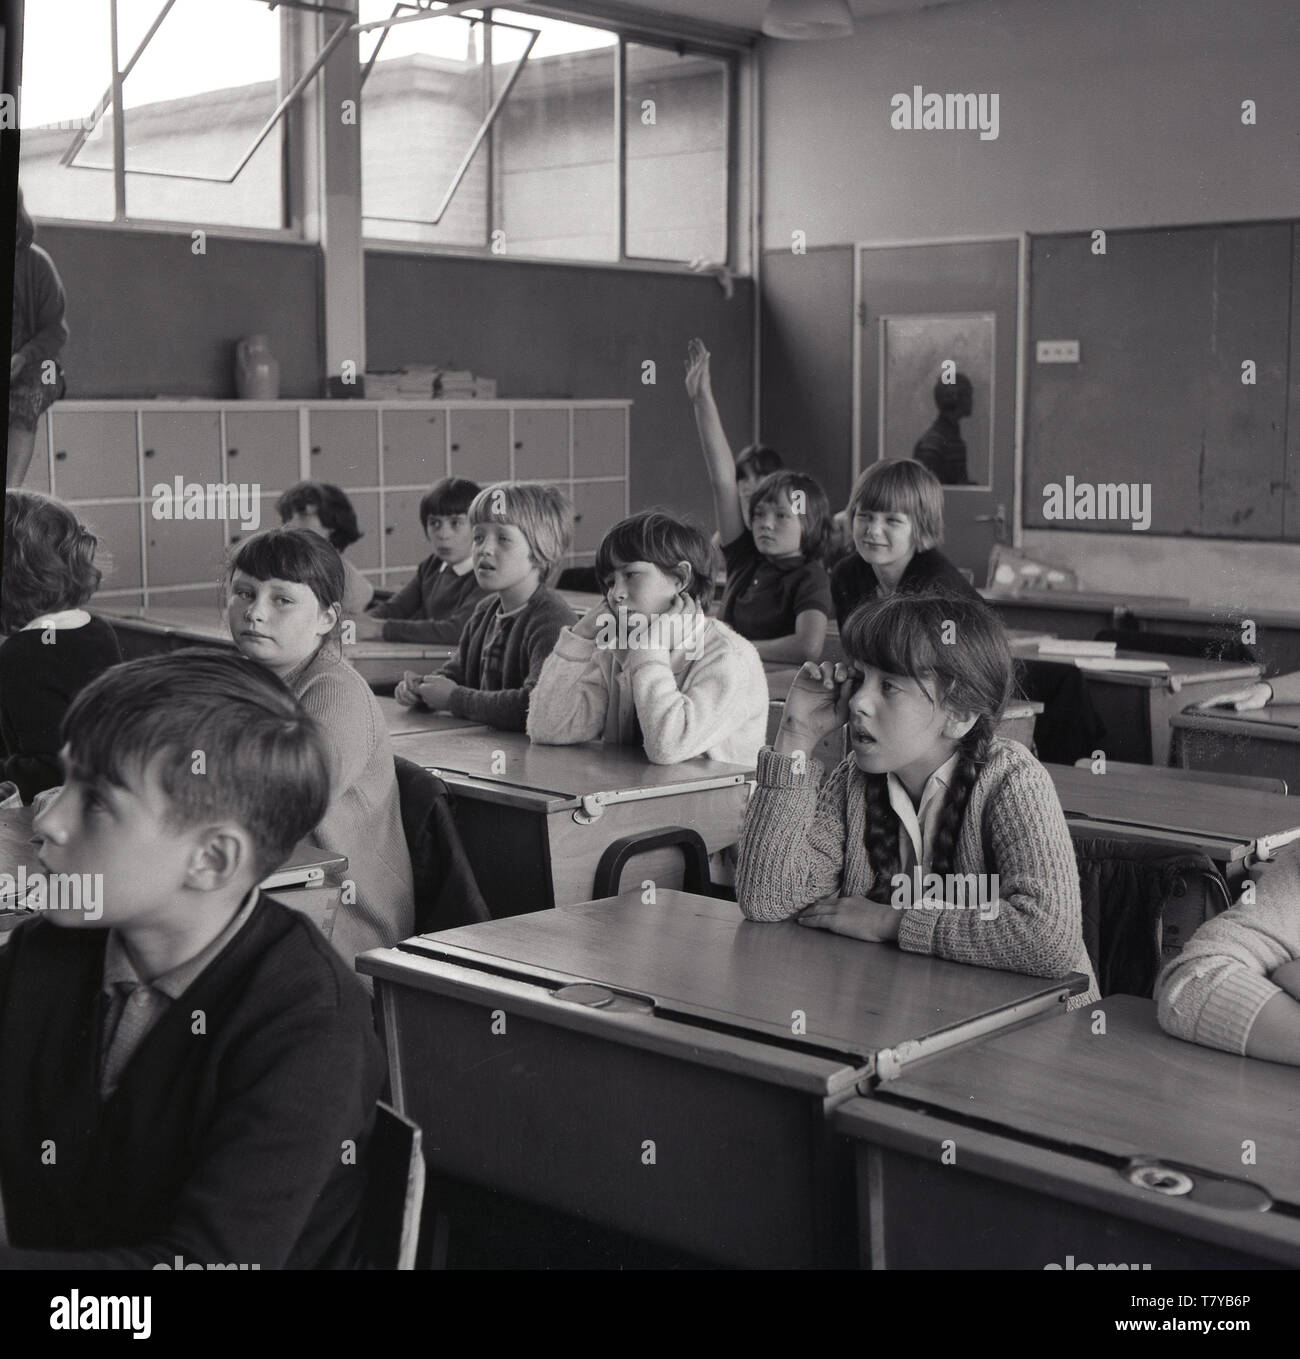 1960s, historical, children sitting at wooden desks inside a school classroom, England, UK. Stock Photo